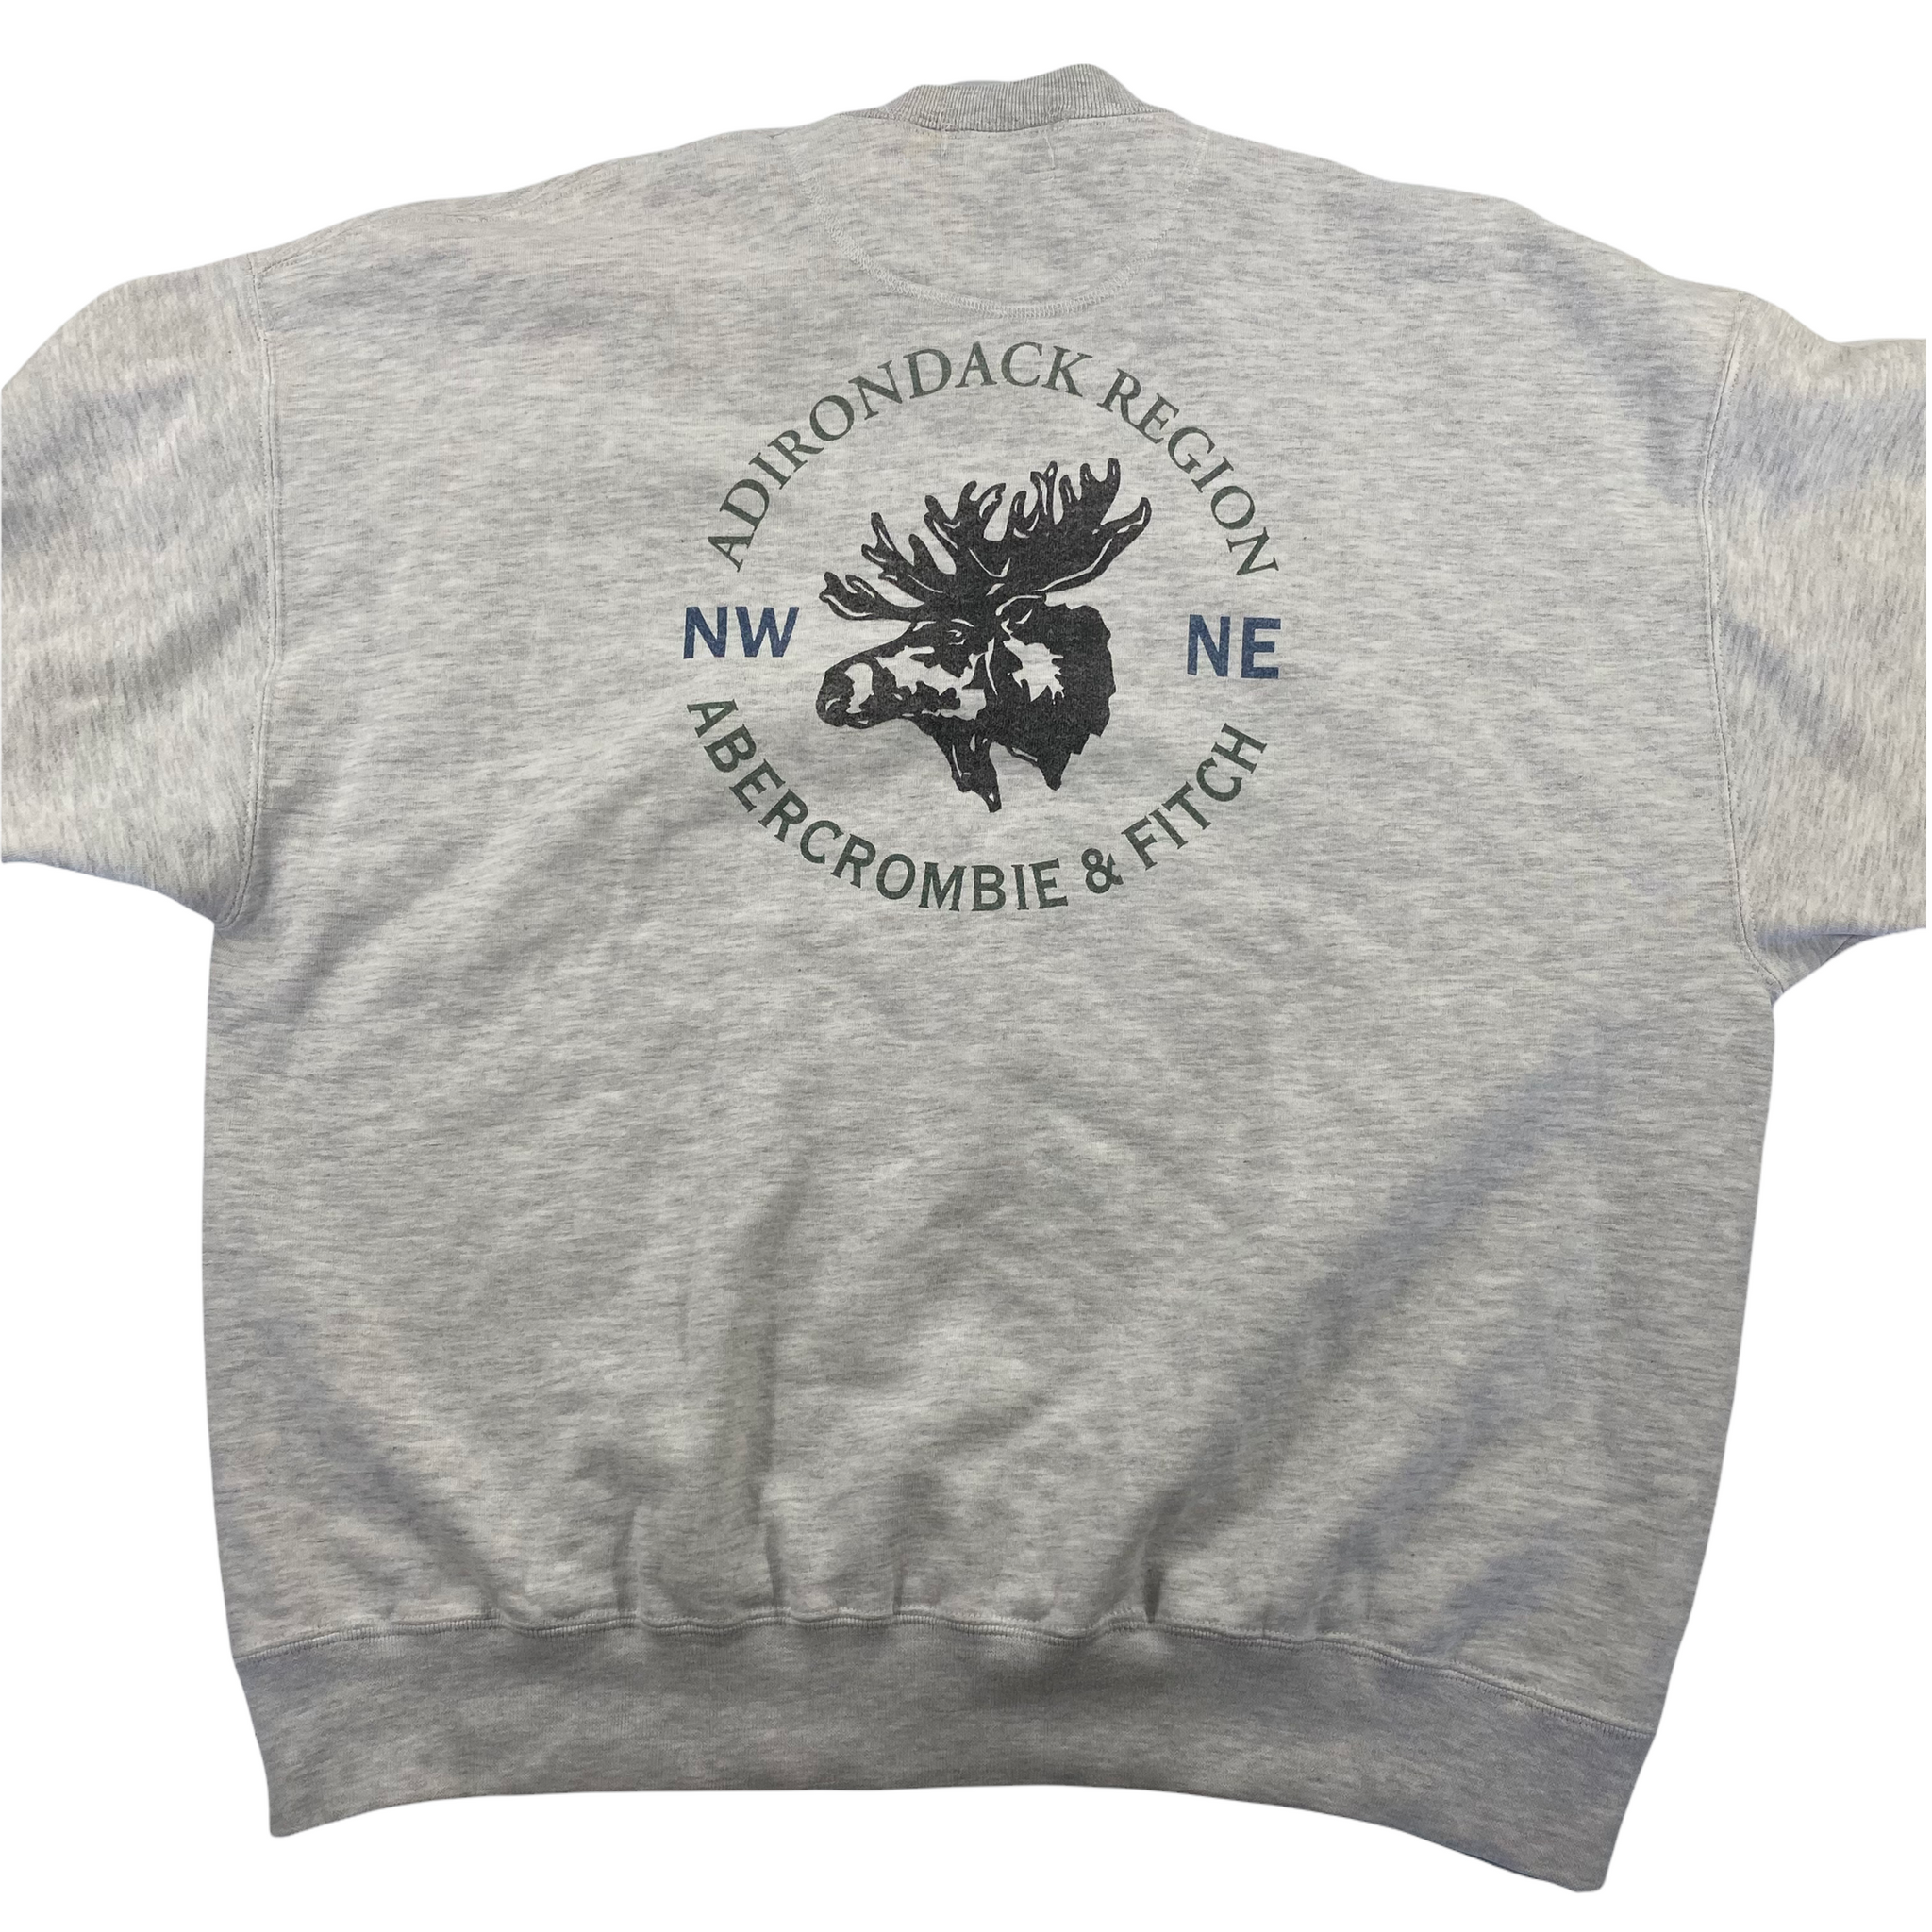 Abercrombie Adirondack moose sweatshirt XL